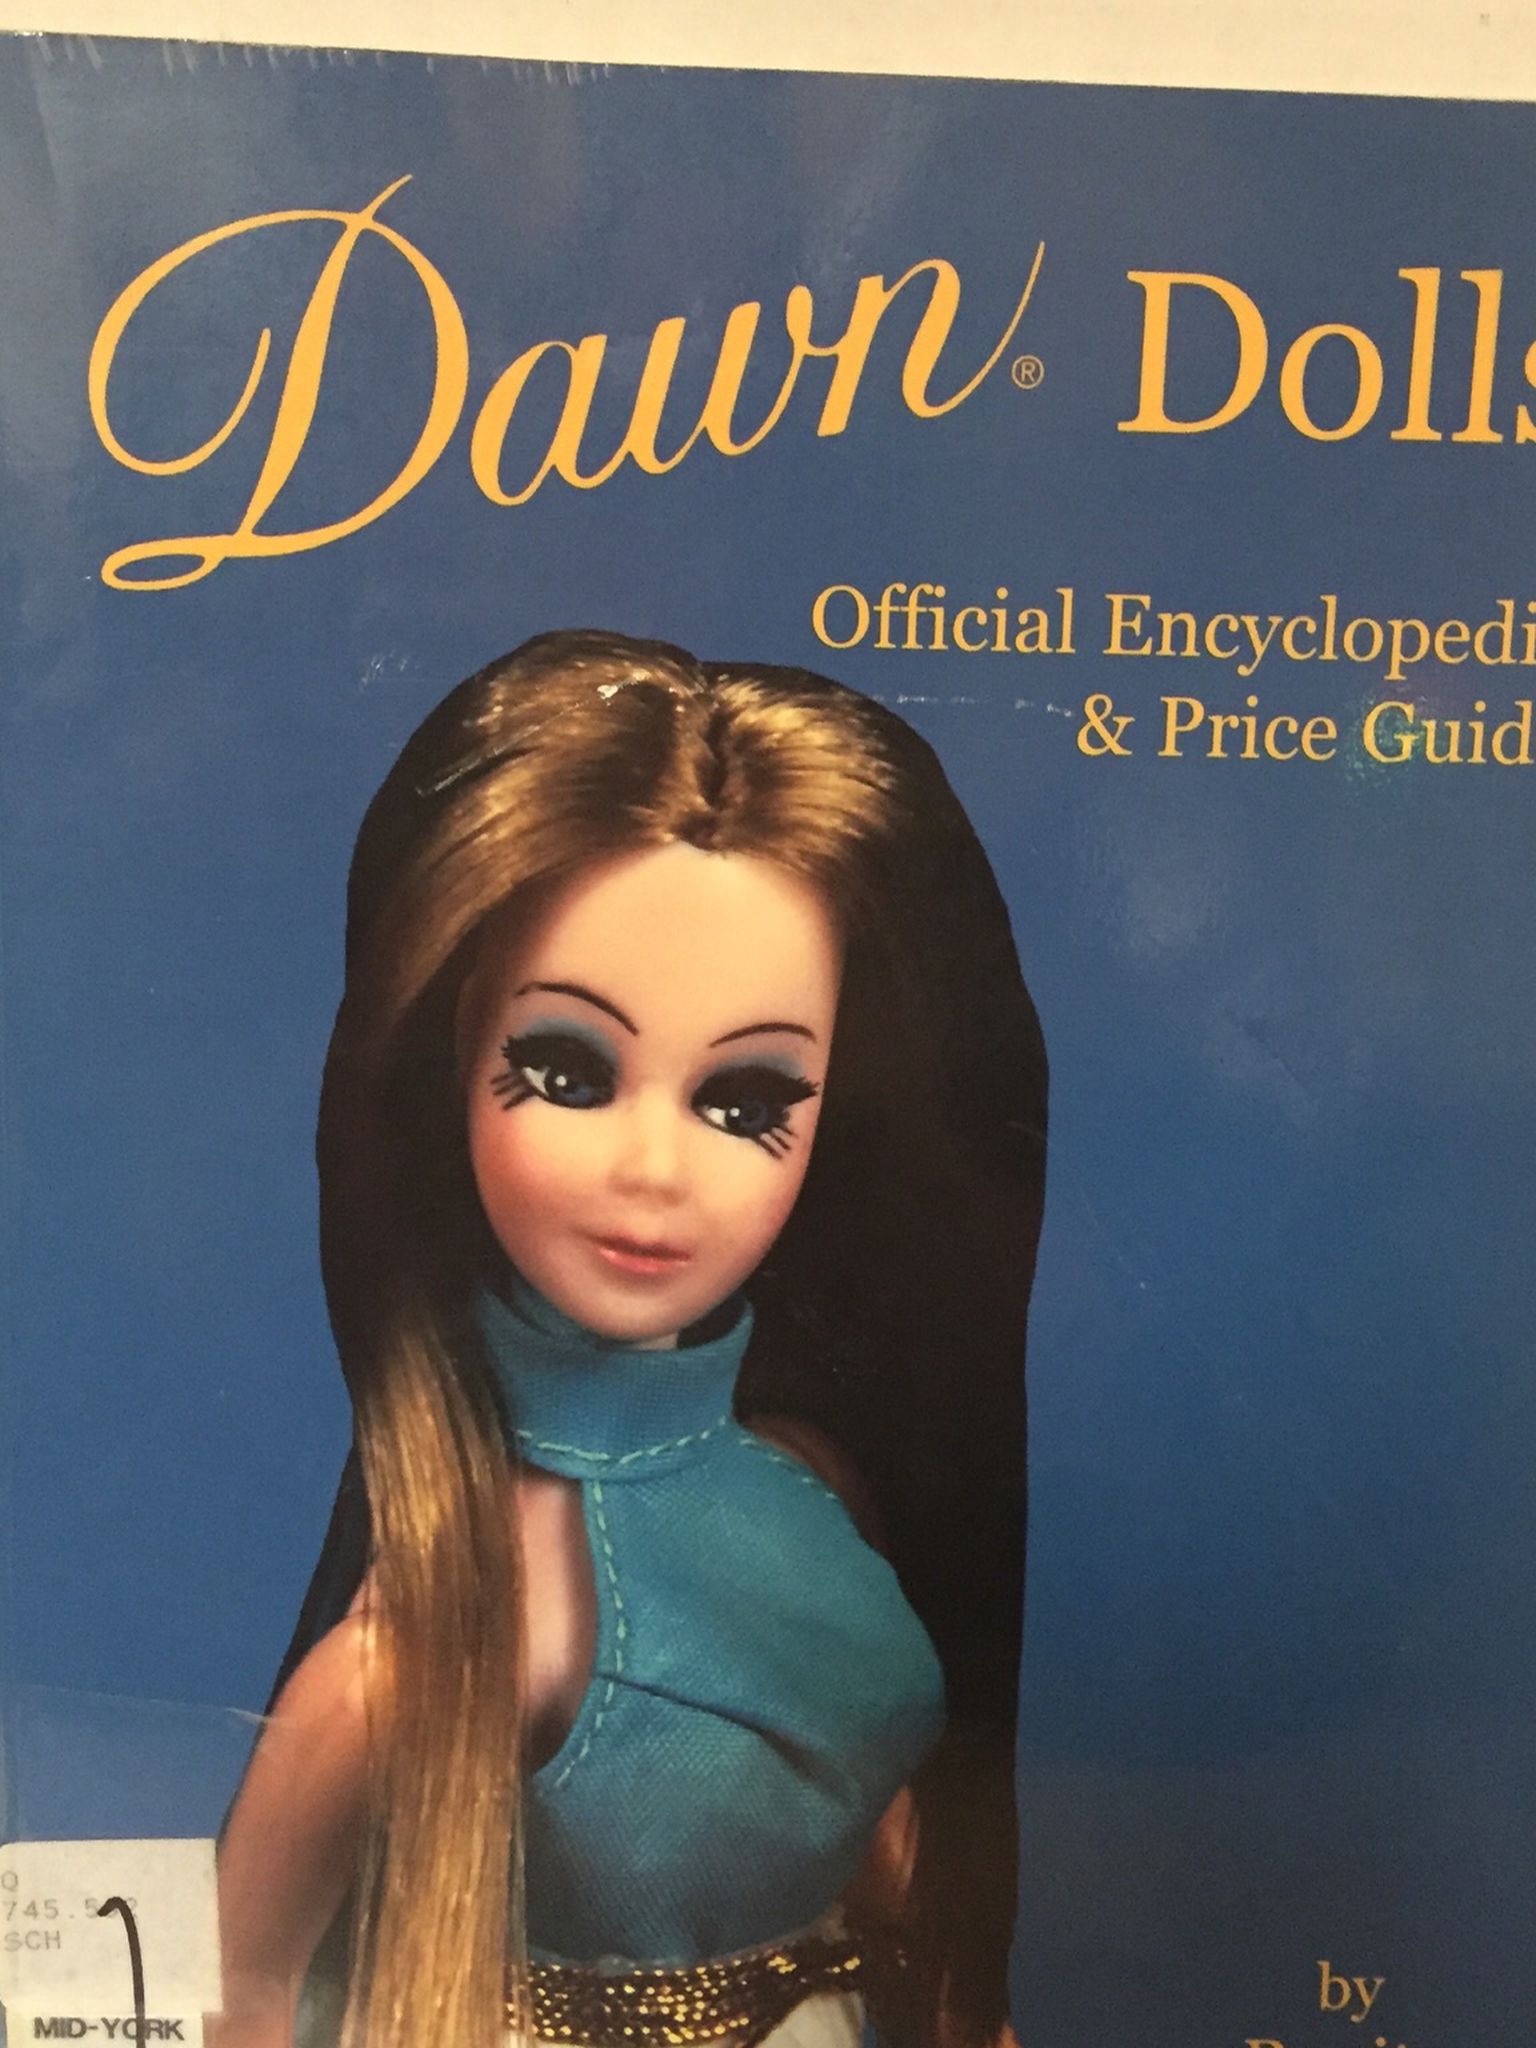 Dawn Dolls: Official Encyclopedia ドーンドール | mdh.com.sa